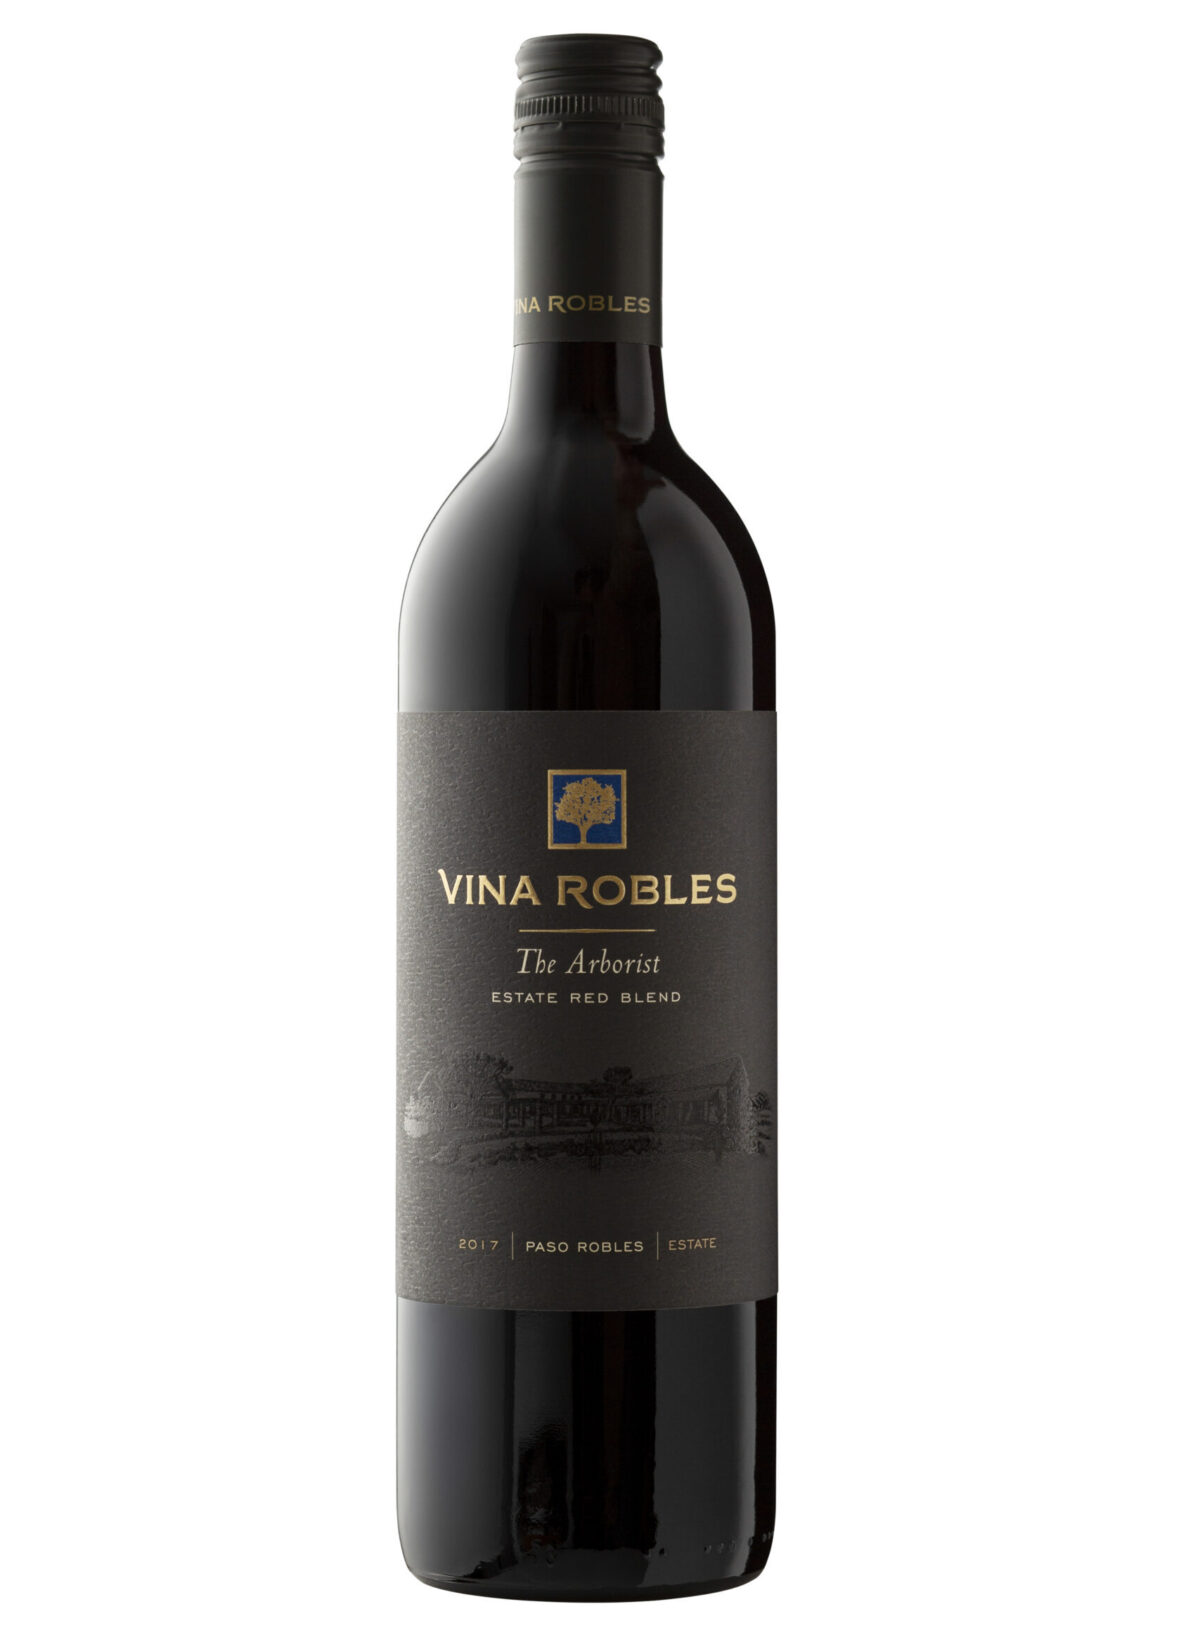 Vina Robles wine bottle.